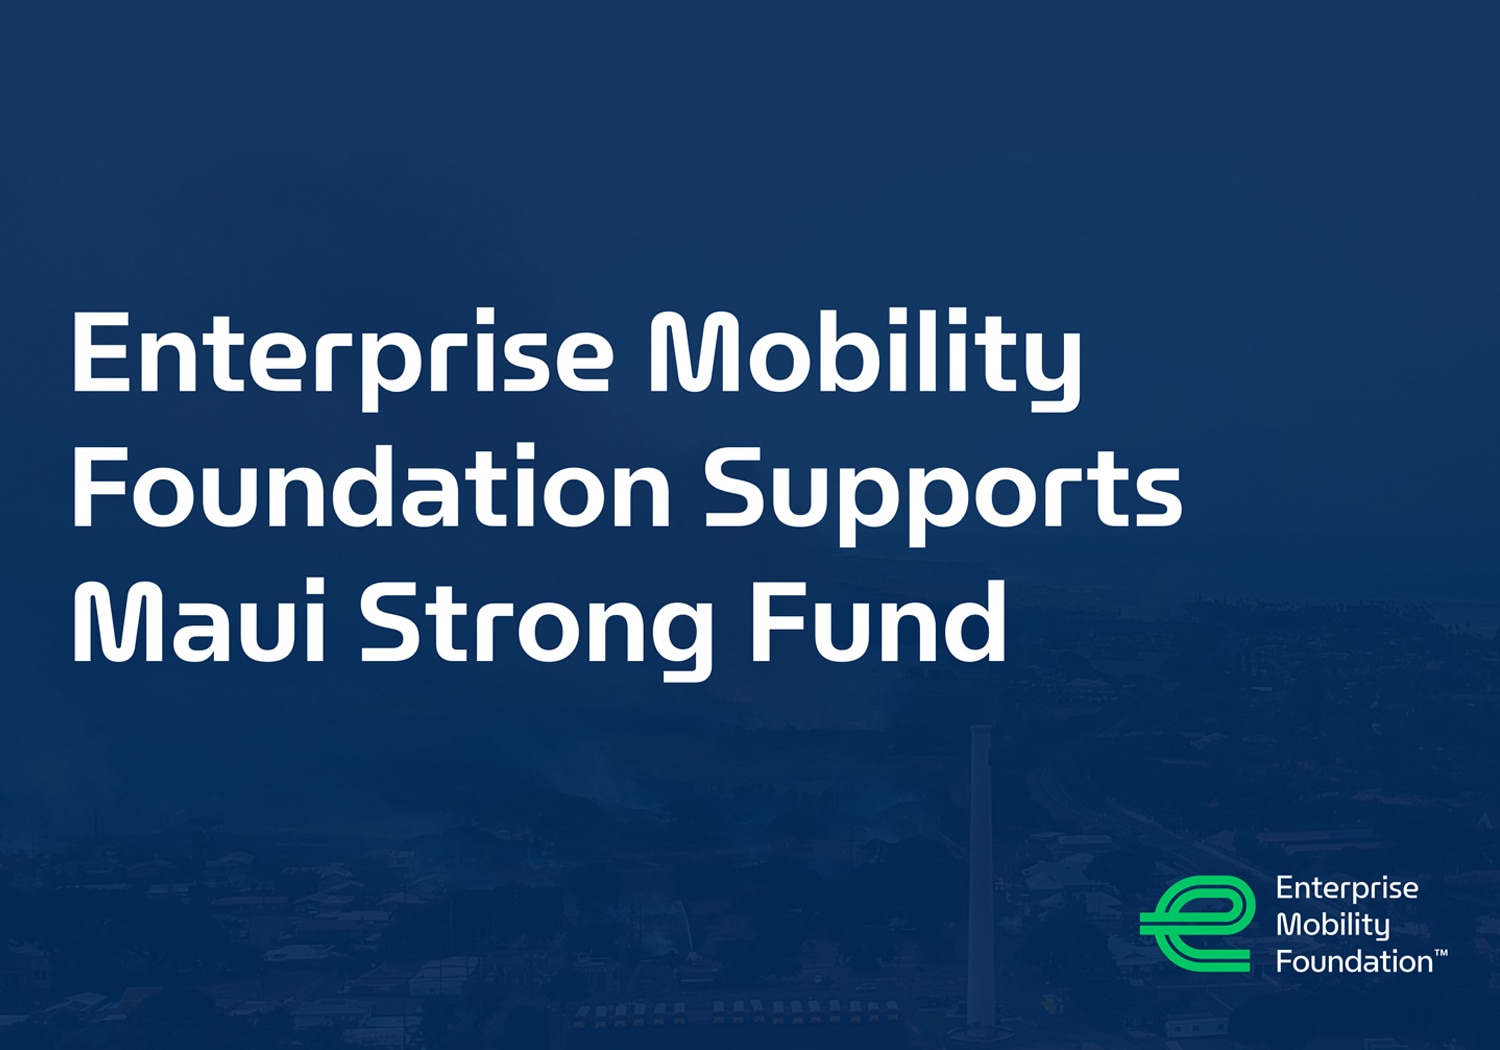 Enterprise Mobility Foundation Announces $250K Grant to Hawai'i Community Foundation